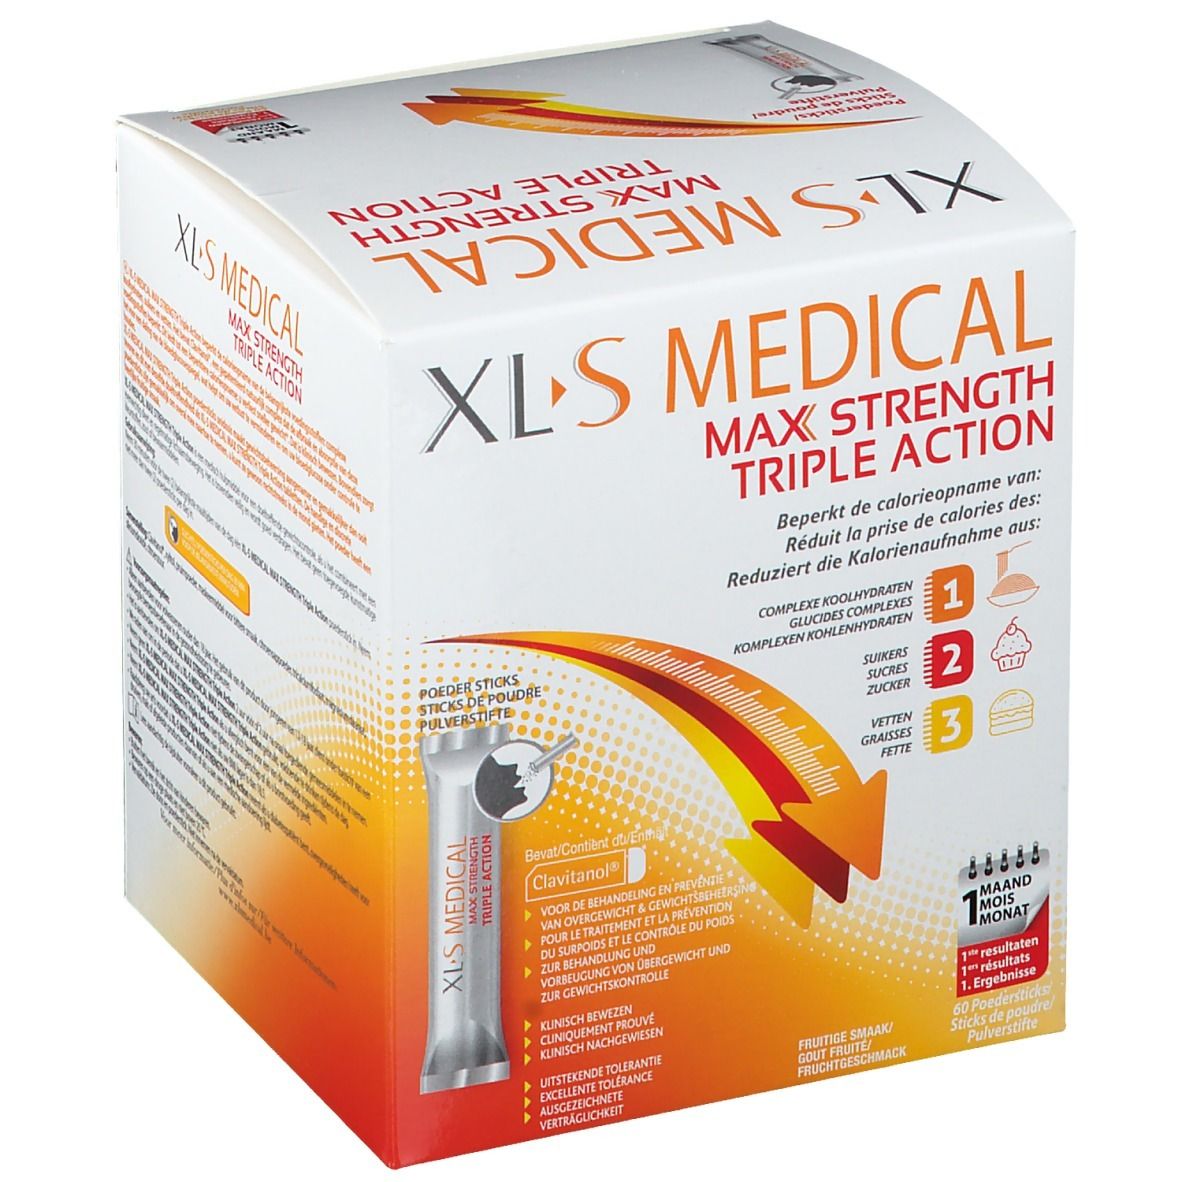 XL-S Medical Max Strength